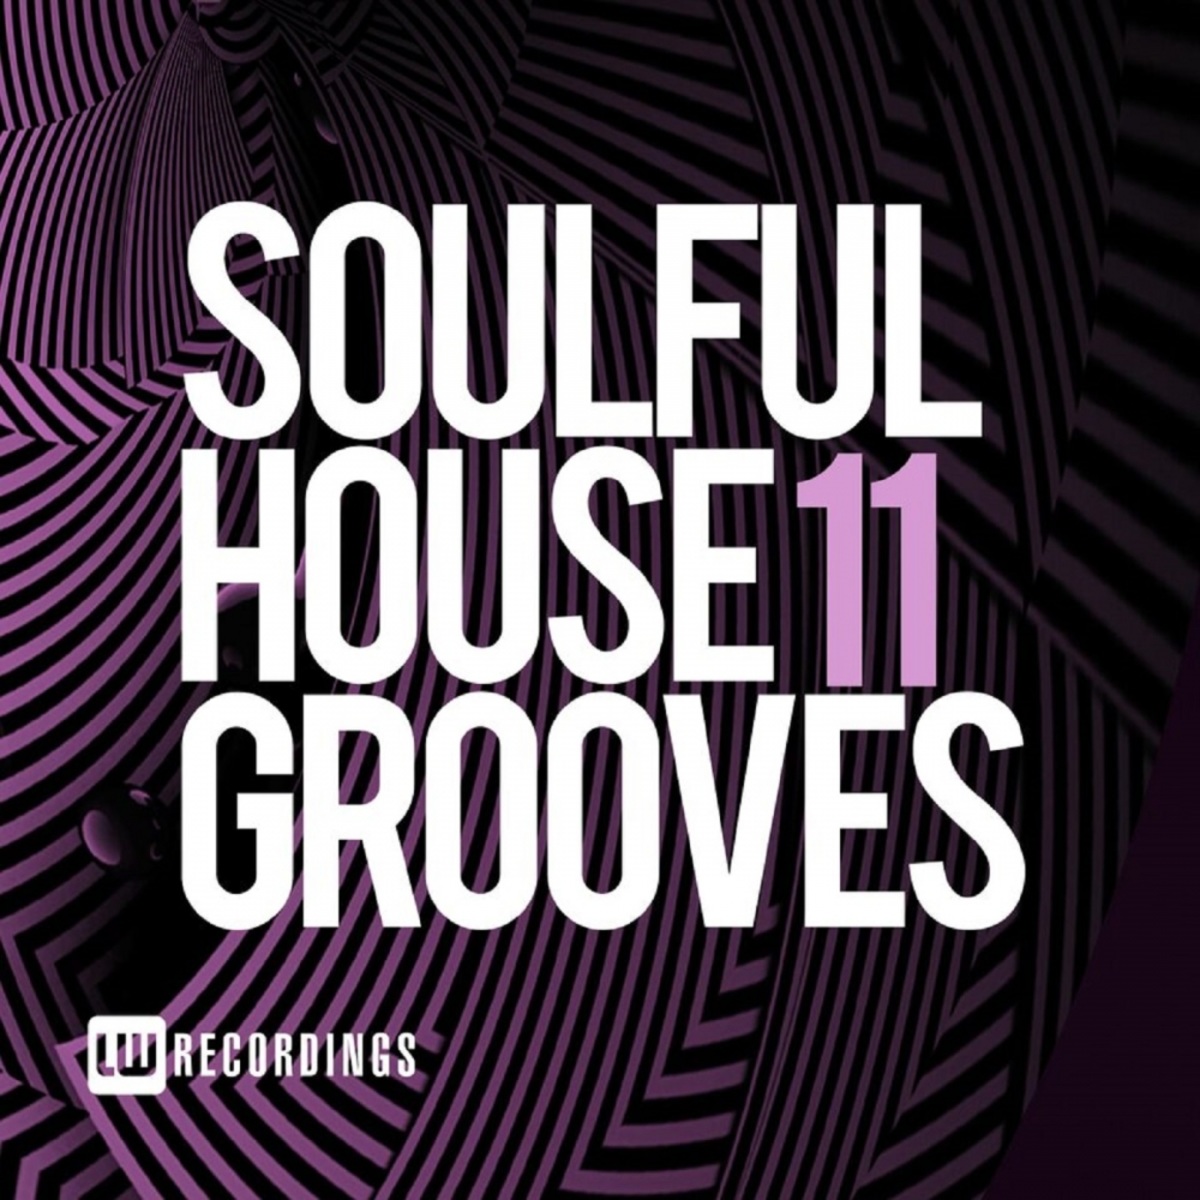 VA - Soulful House Grooves, Vol. 11 / LW Recordings